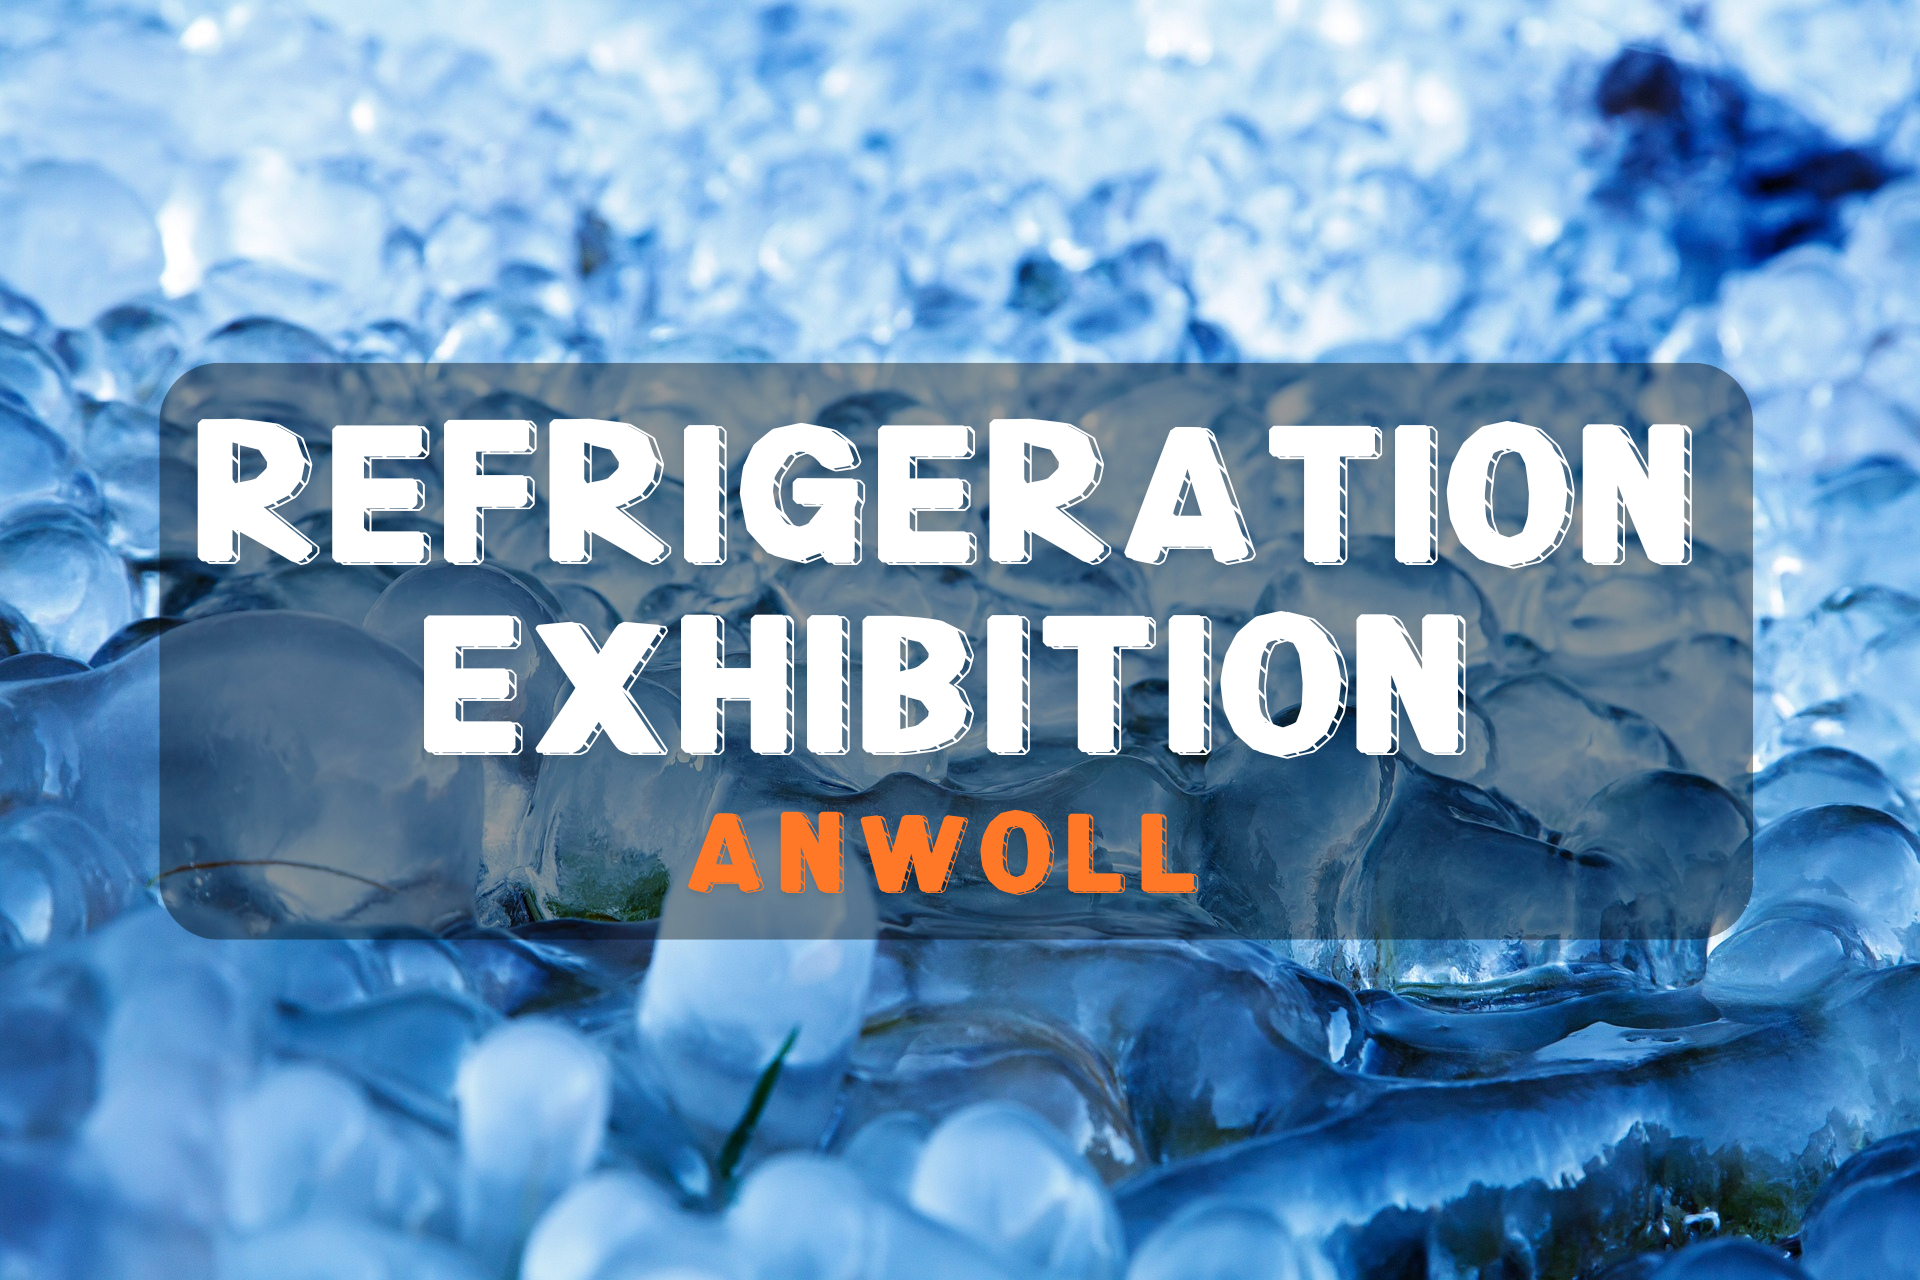 Refrigeration exhibition